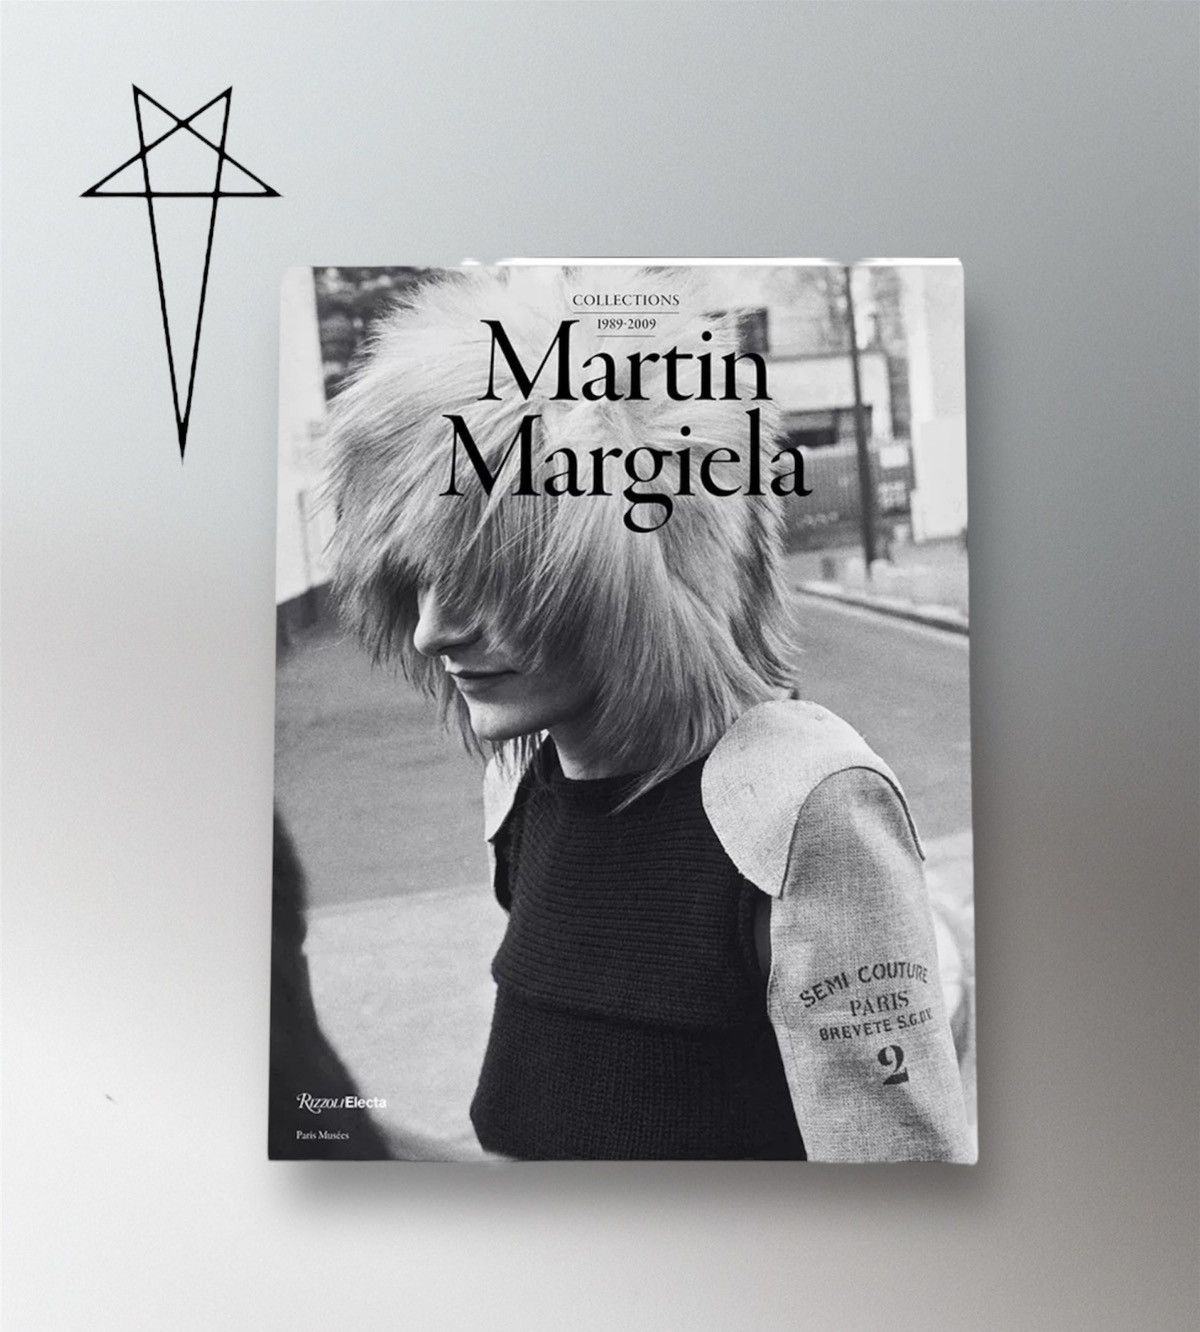 Maison Margiela Martin Margiela: The Women's Collections 1989-2009 